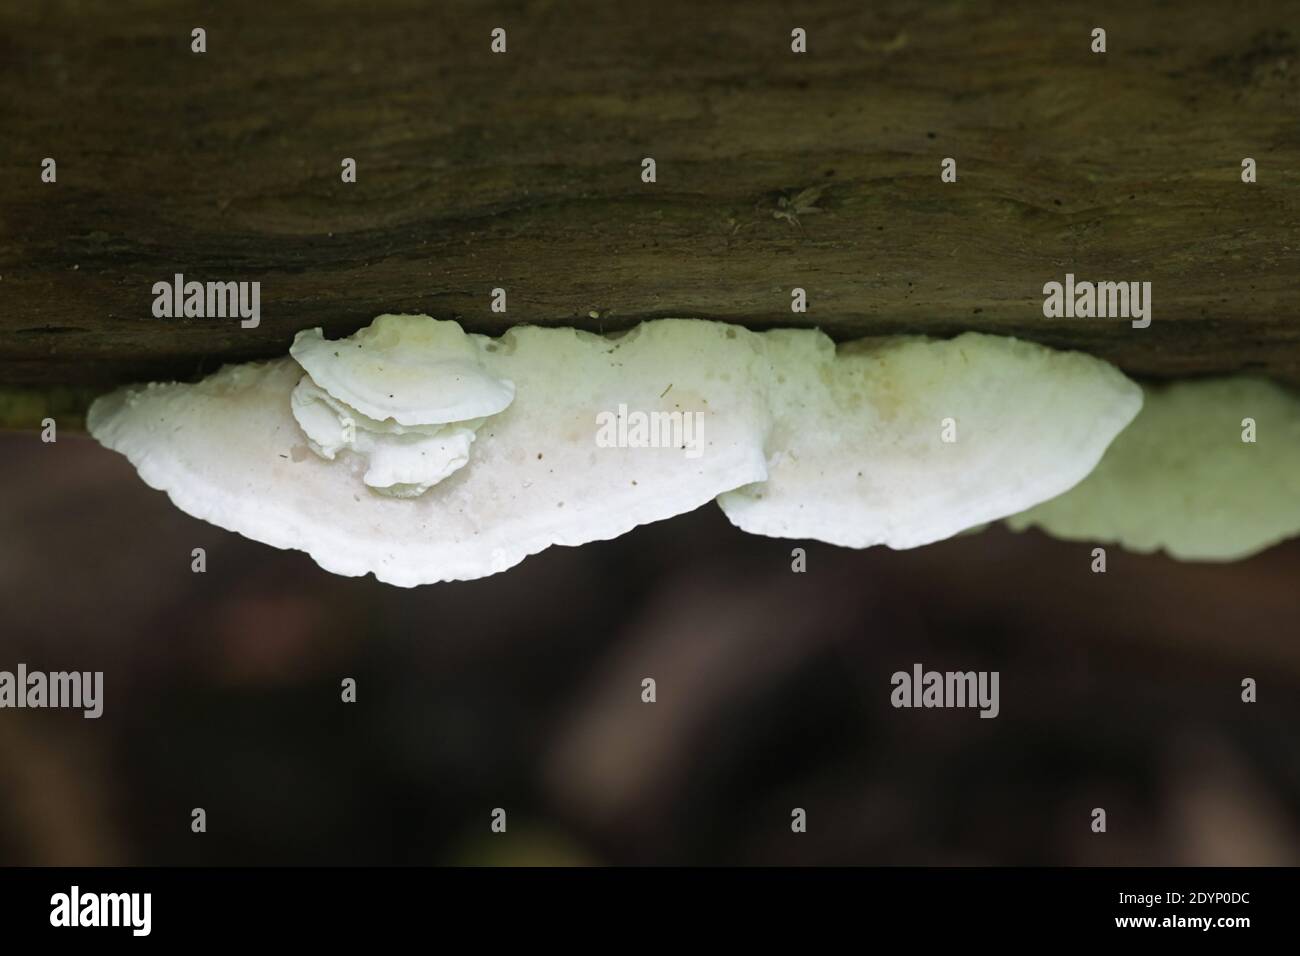 Postia lactea, a polypore fungus from Finland with no common english name Stock Photo